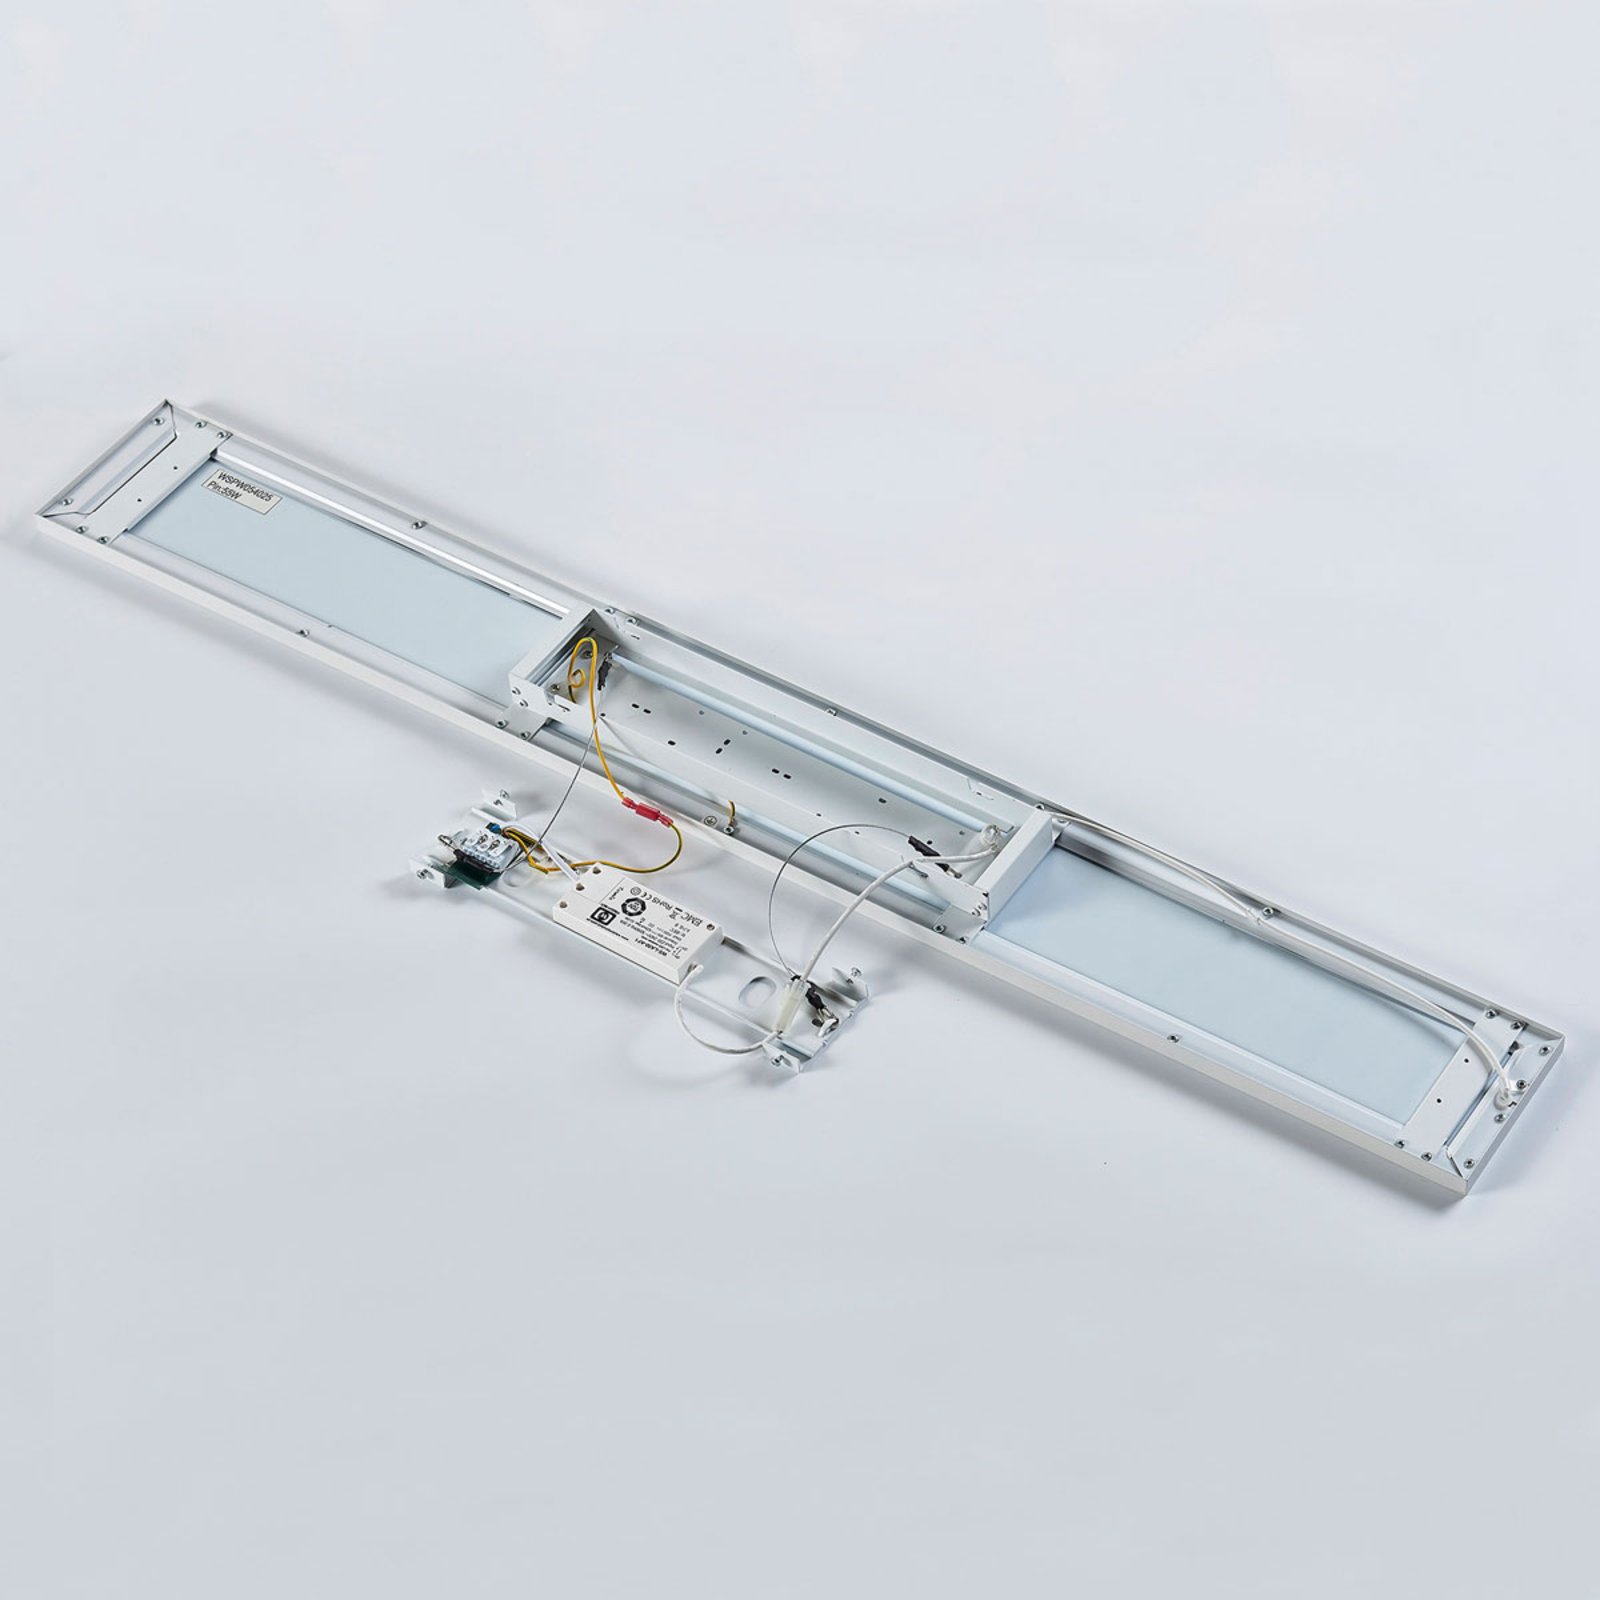 Arcchio Enora pannello LED, 119,5 cm, 40 W